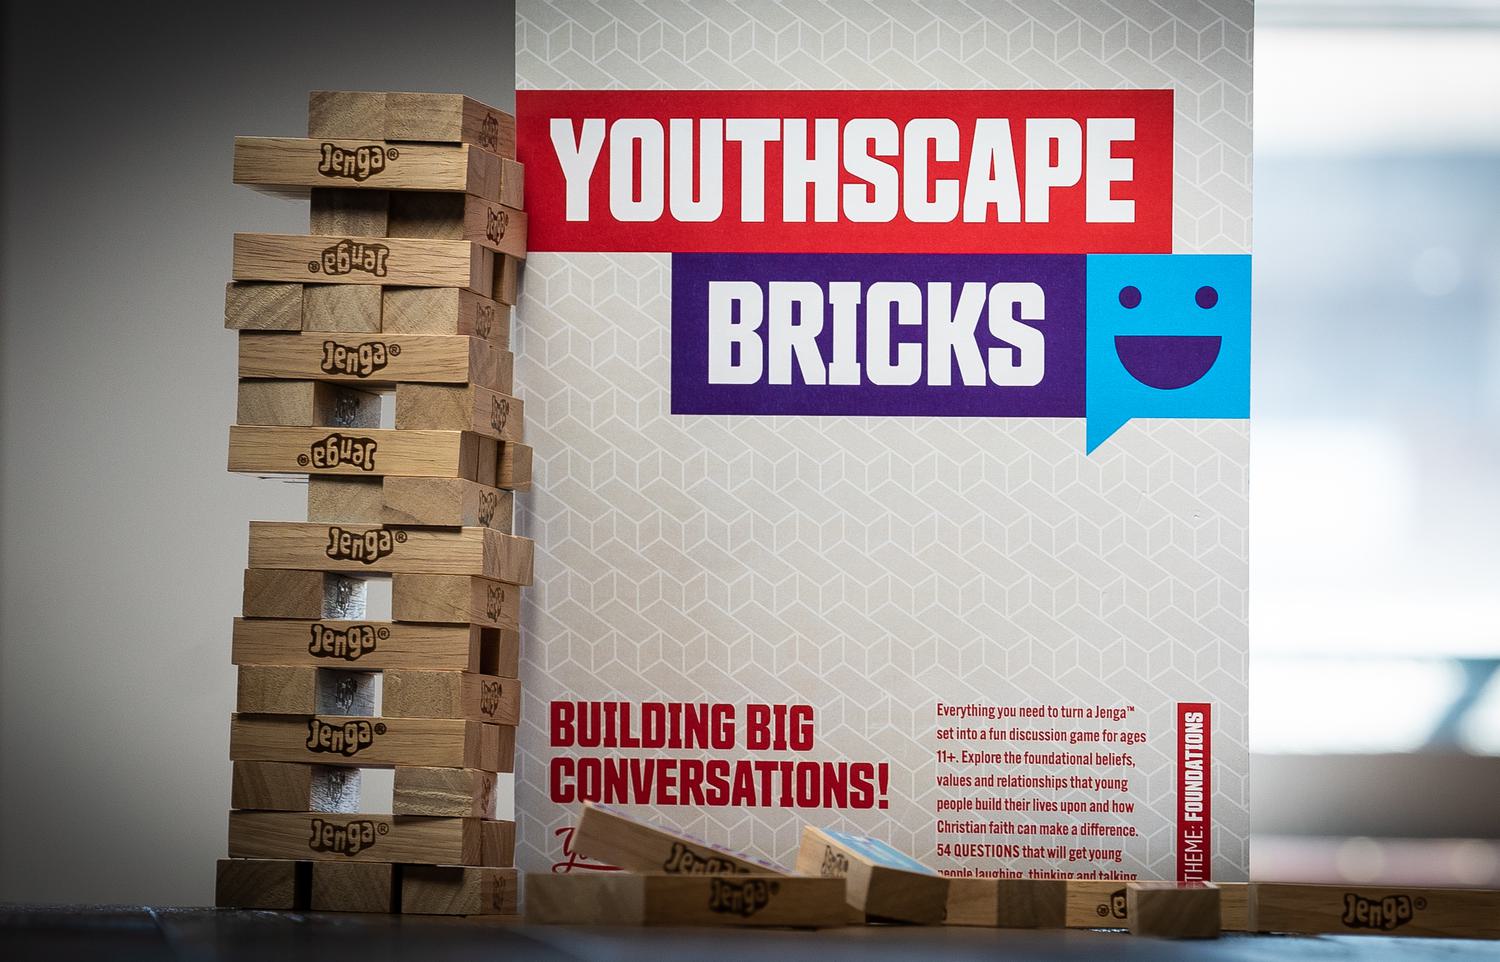 Youthscape Bricks